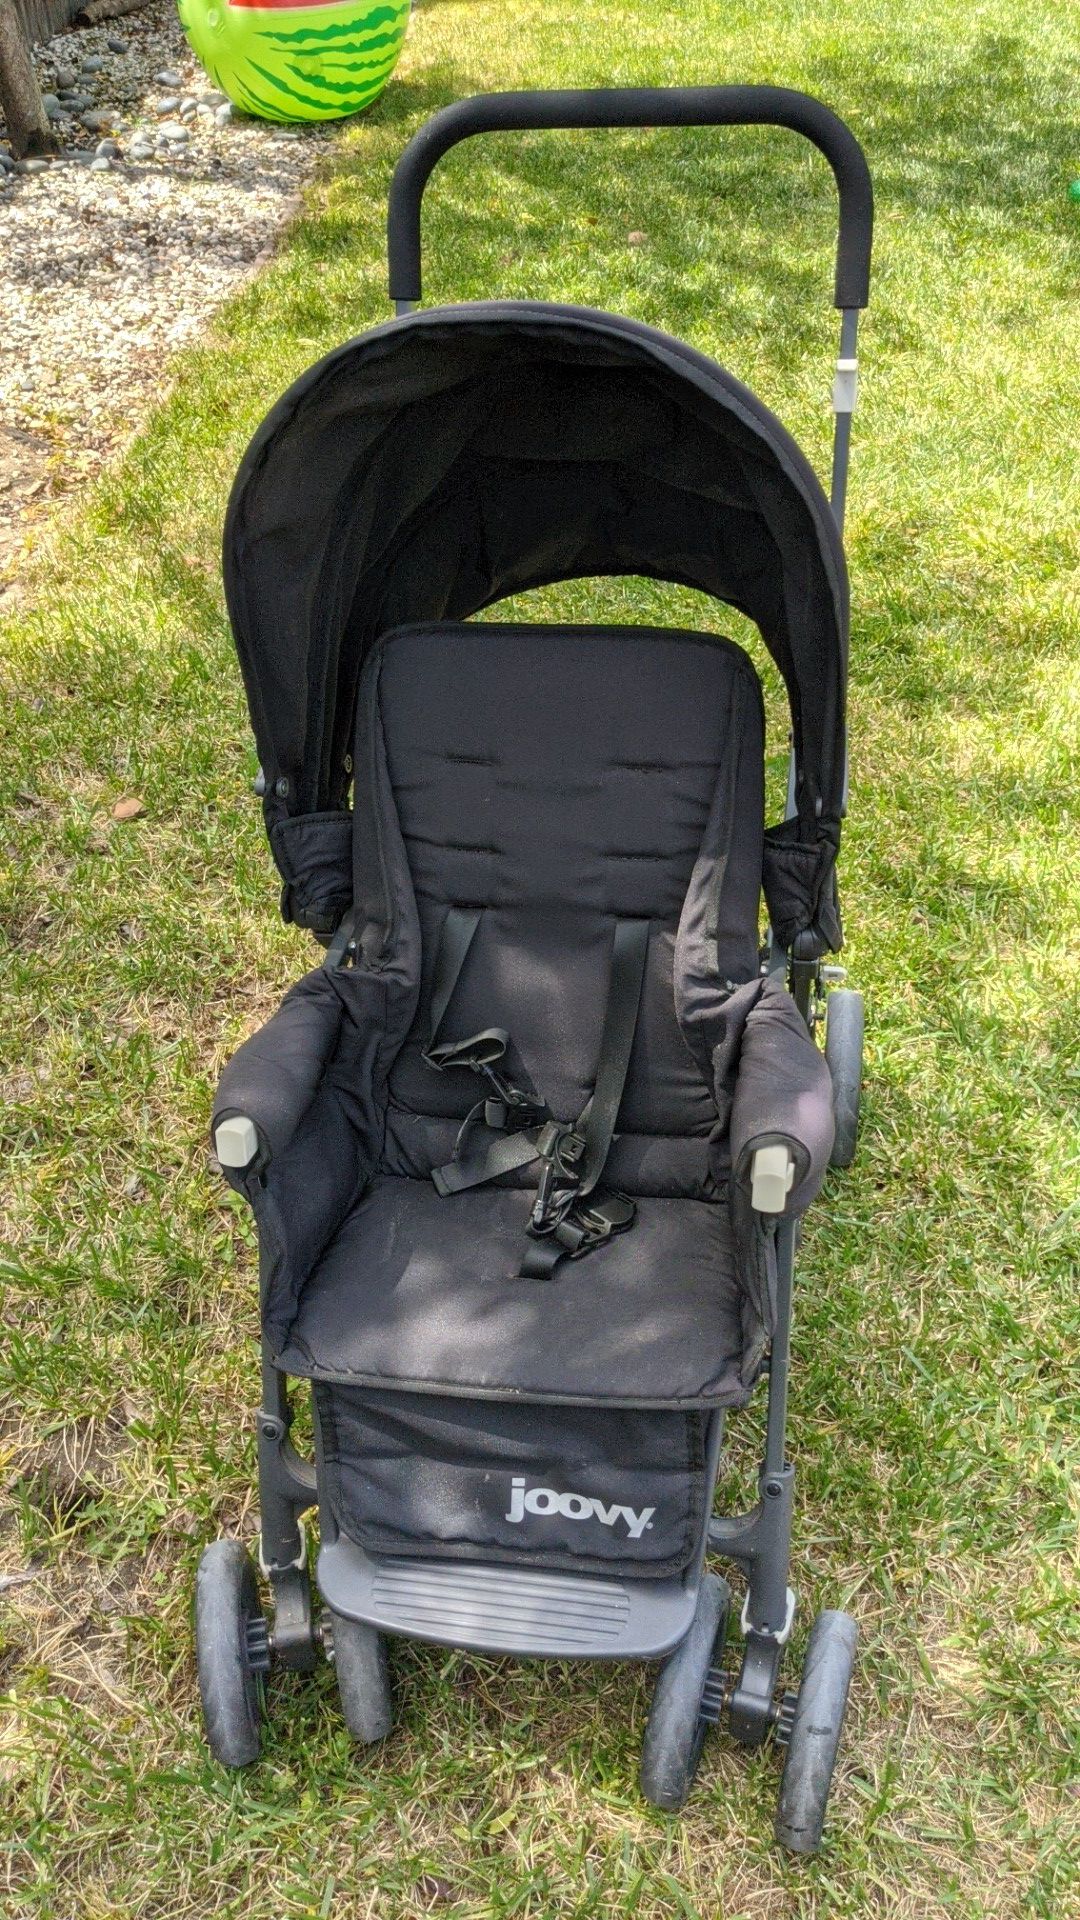 Double kid stroller